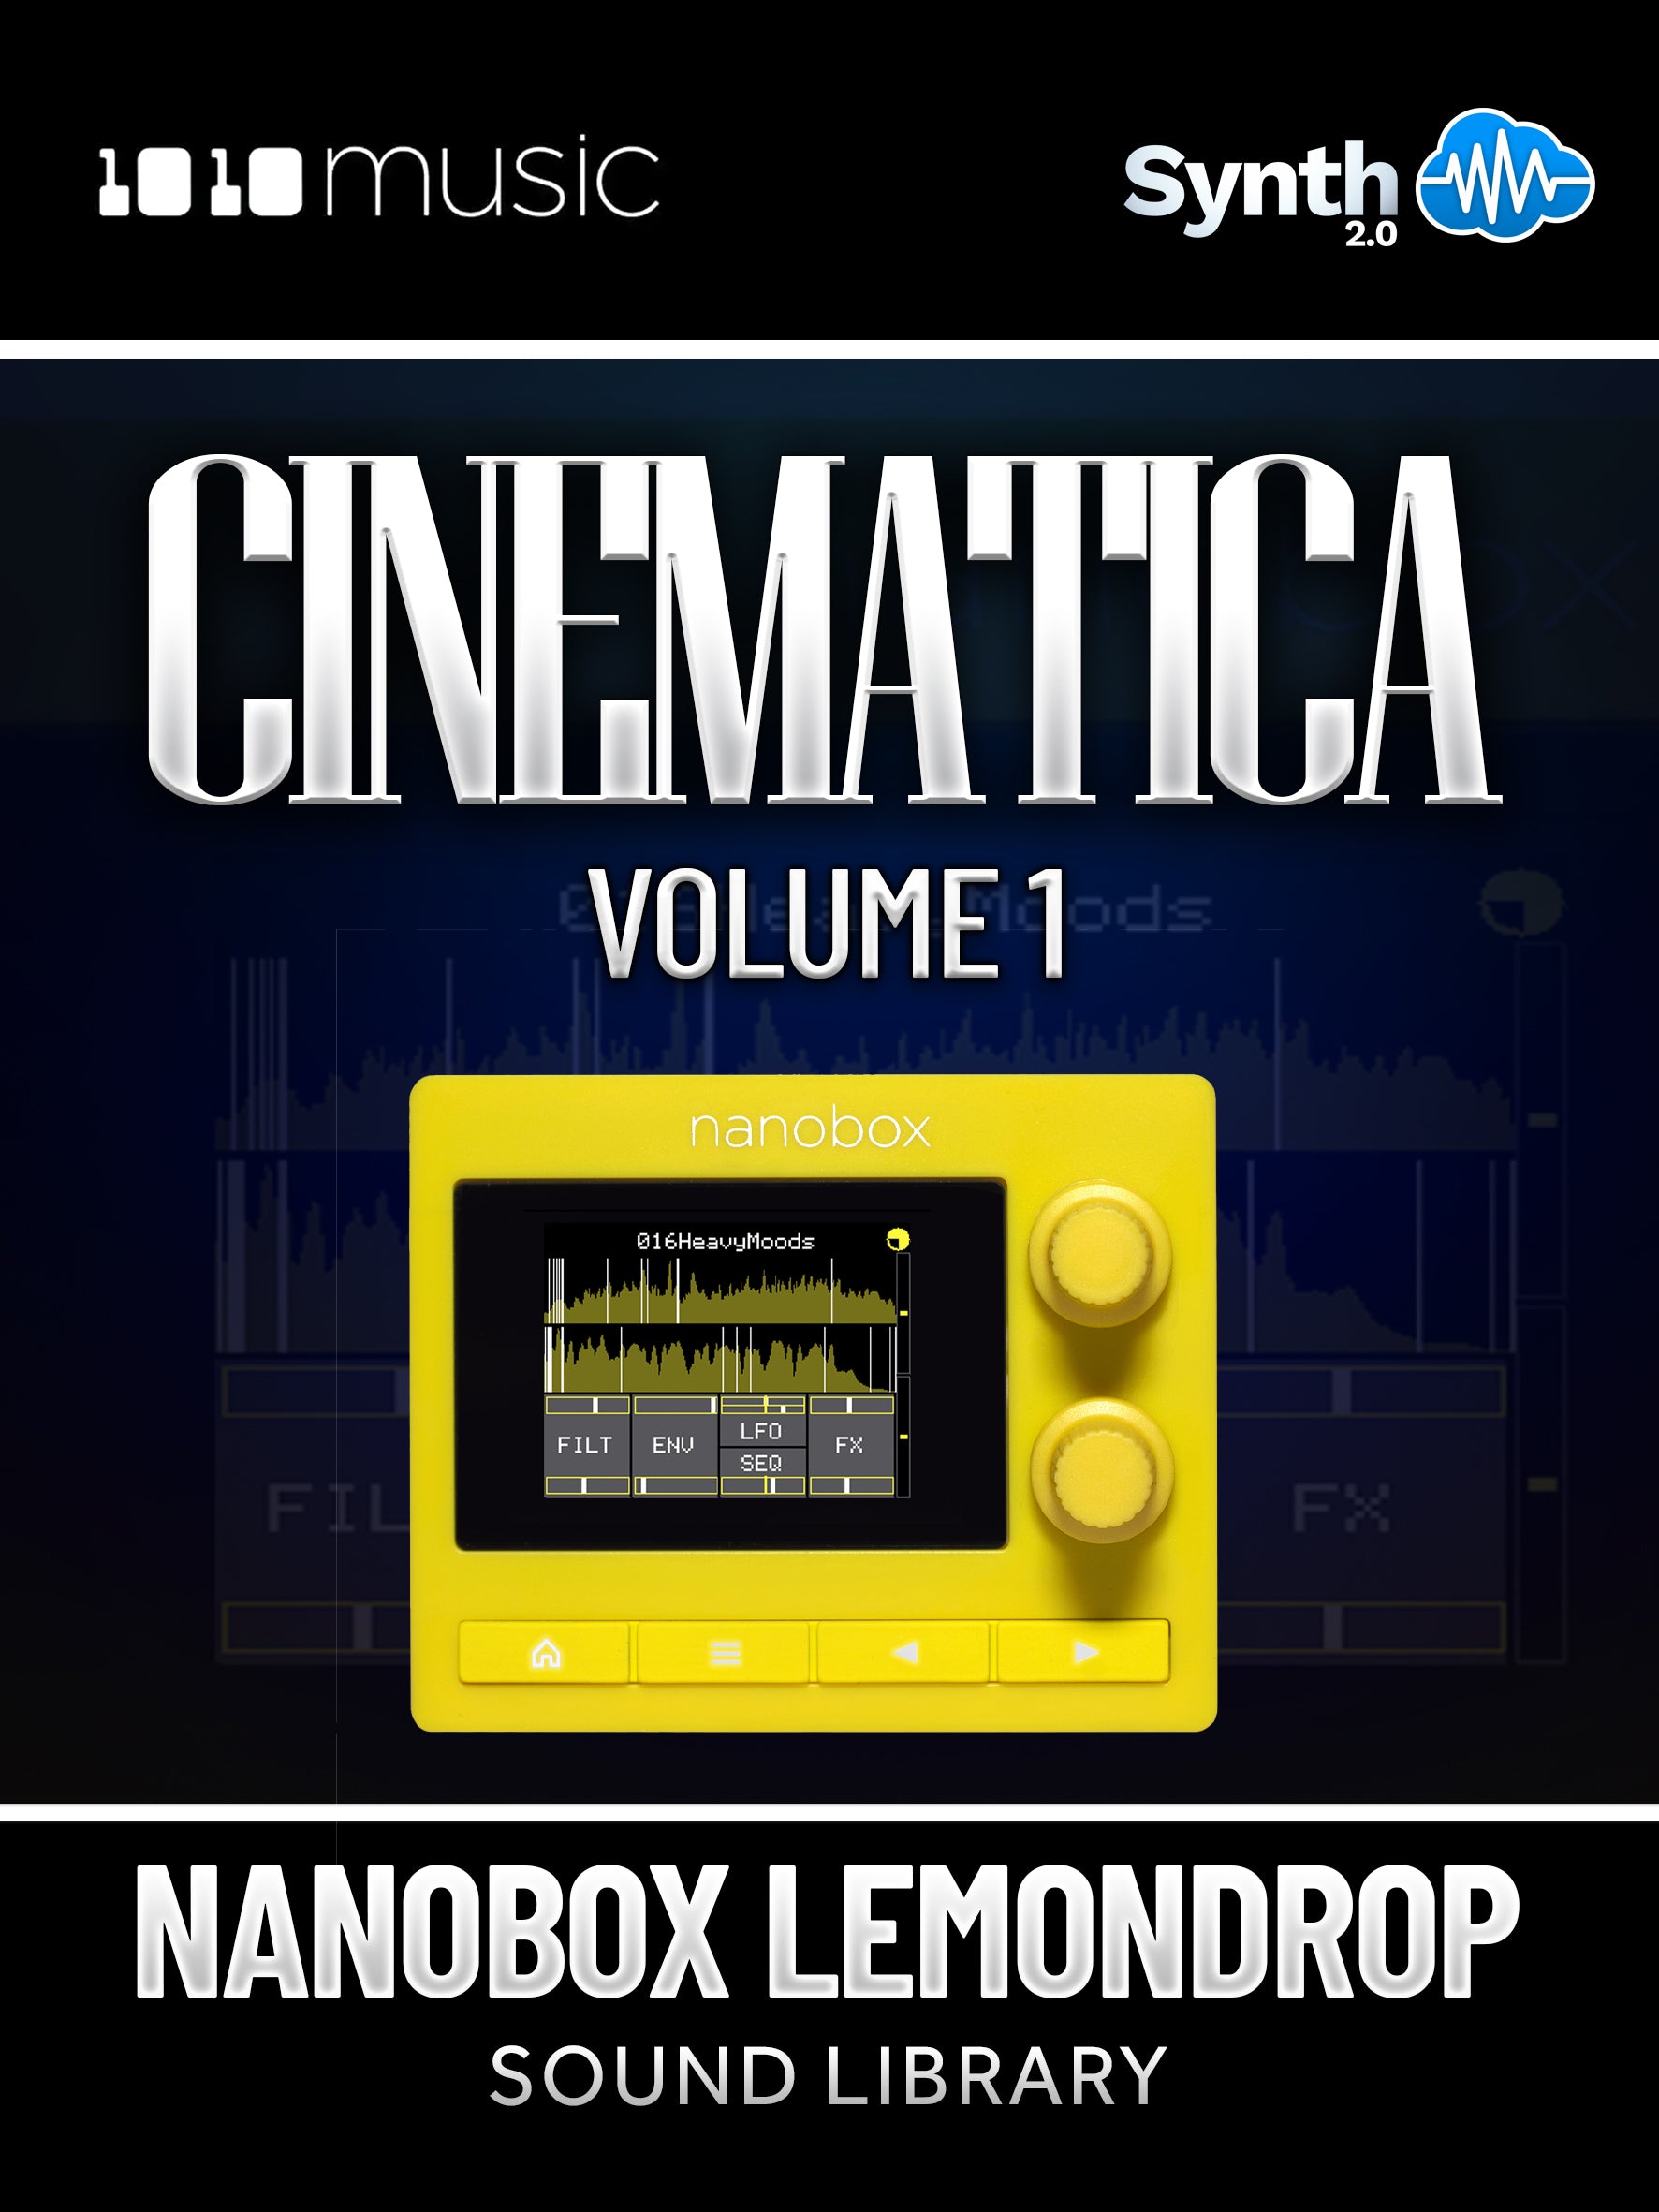 LFO002 - Cinematica - 1010 Music Nanobox Lemondrop ( 40 presets )